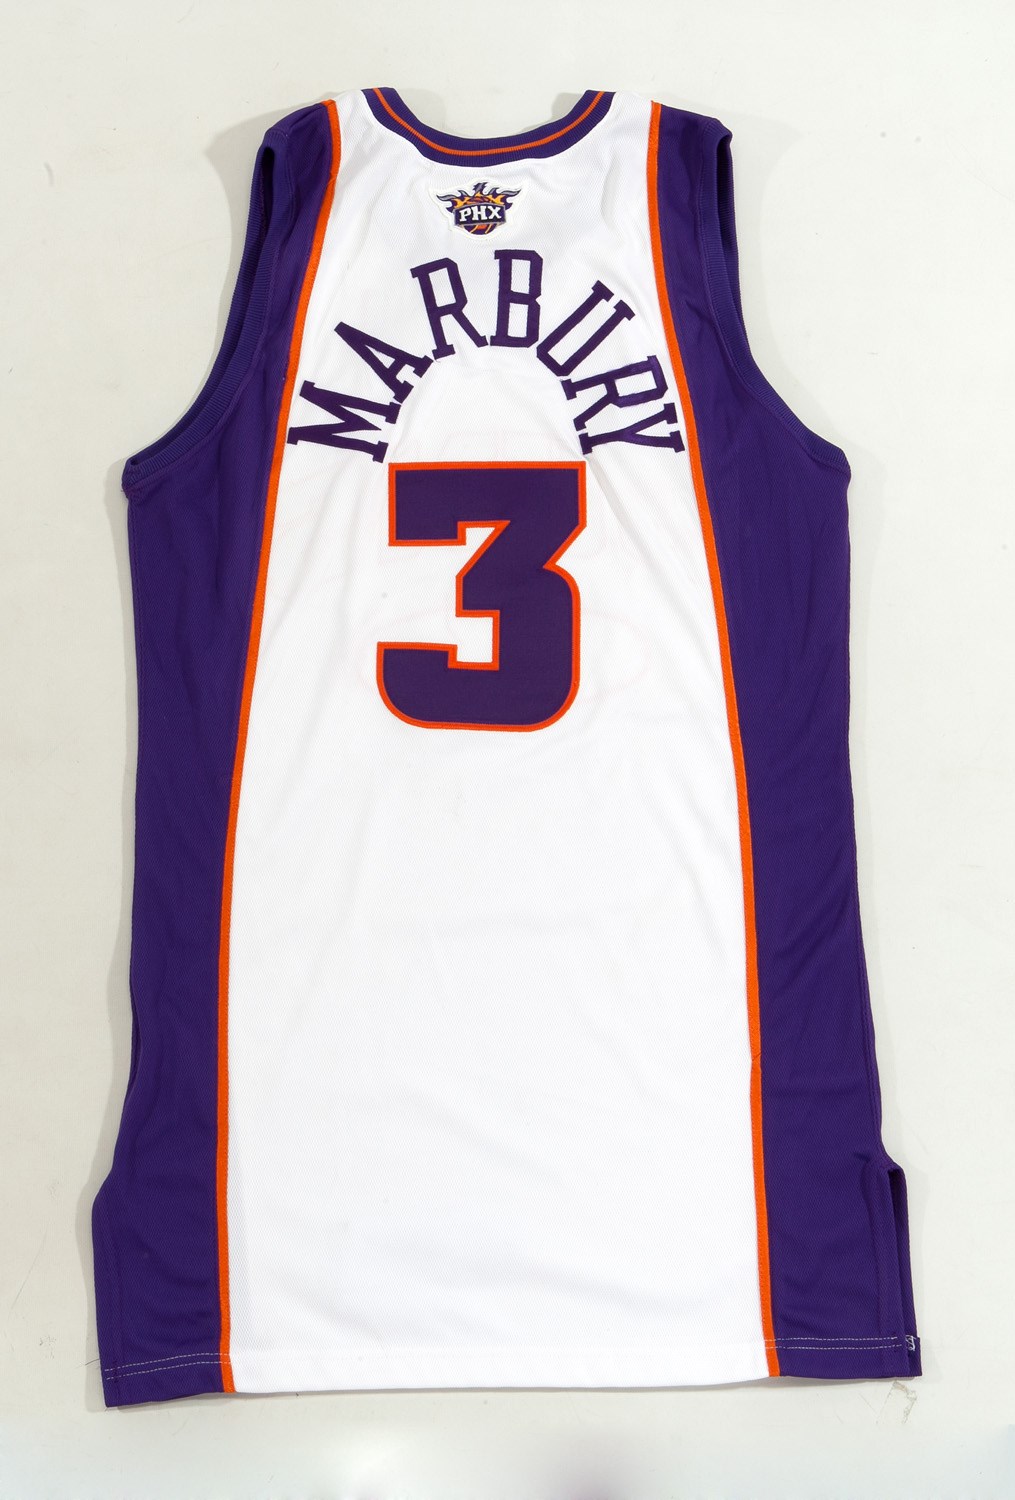 2003 Stephon Marbury Phoenix Suns Reebok Authentic NBA Jersey Size